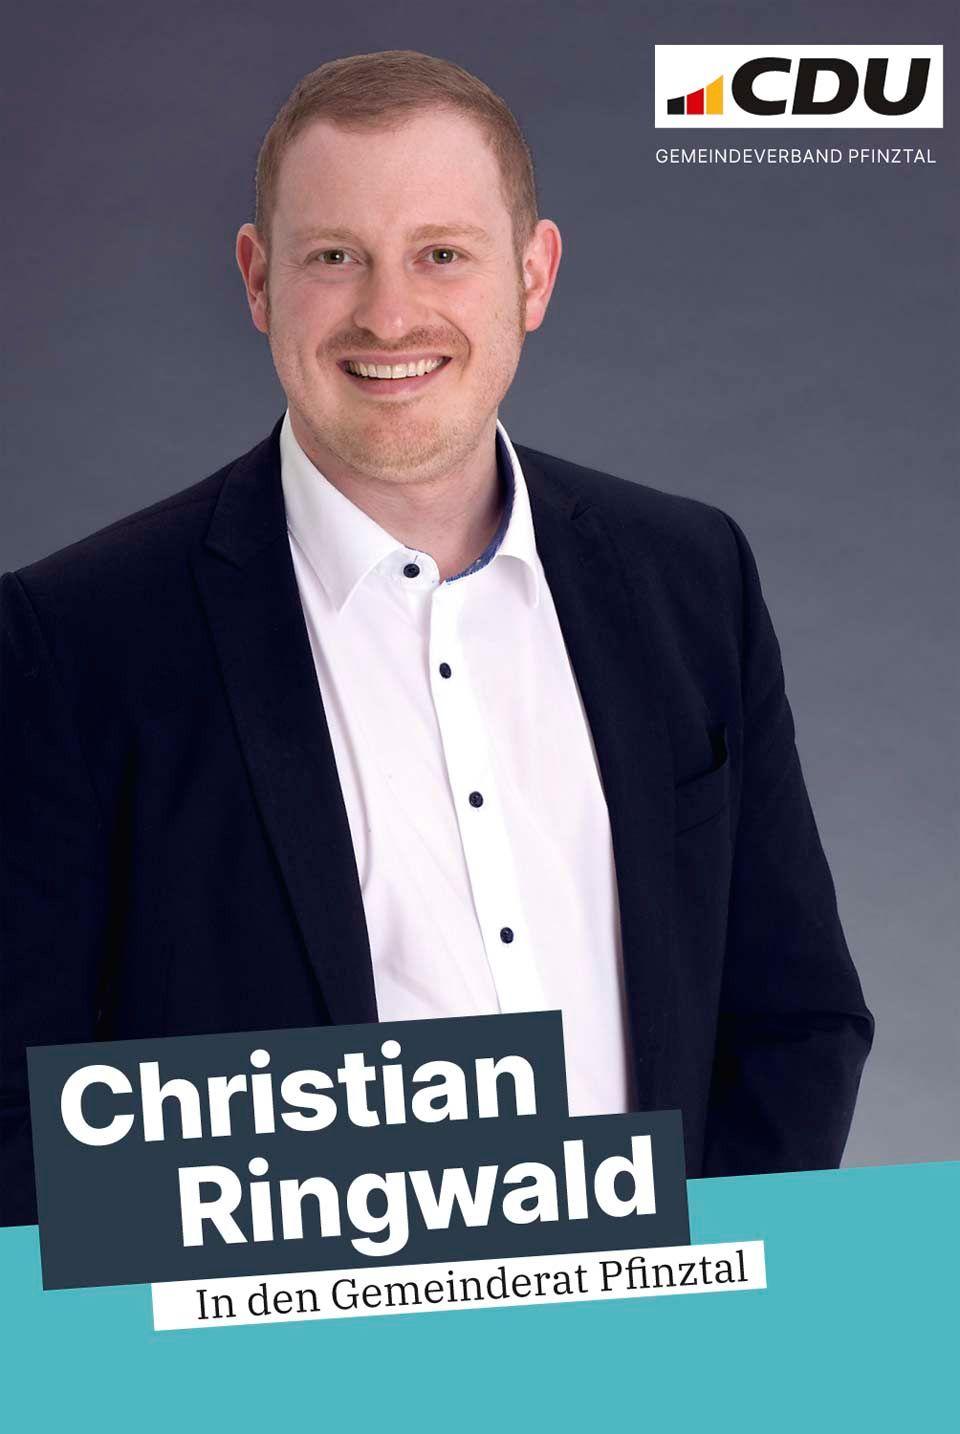 Christian Ringwald